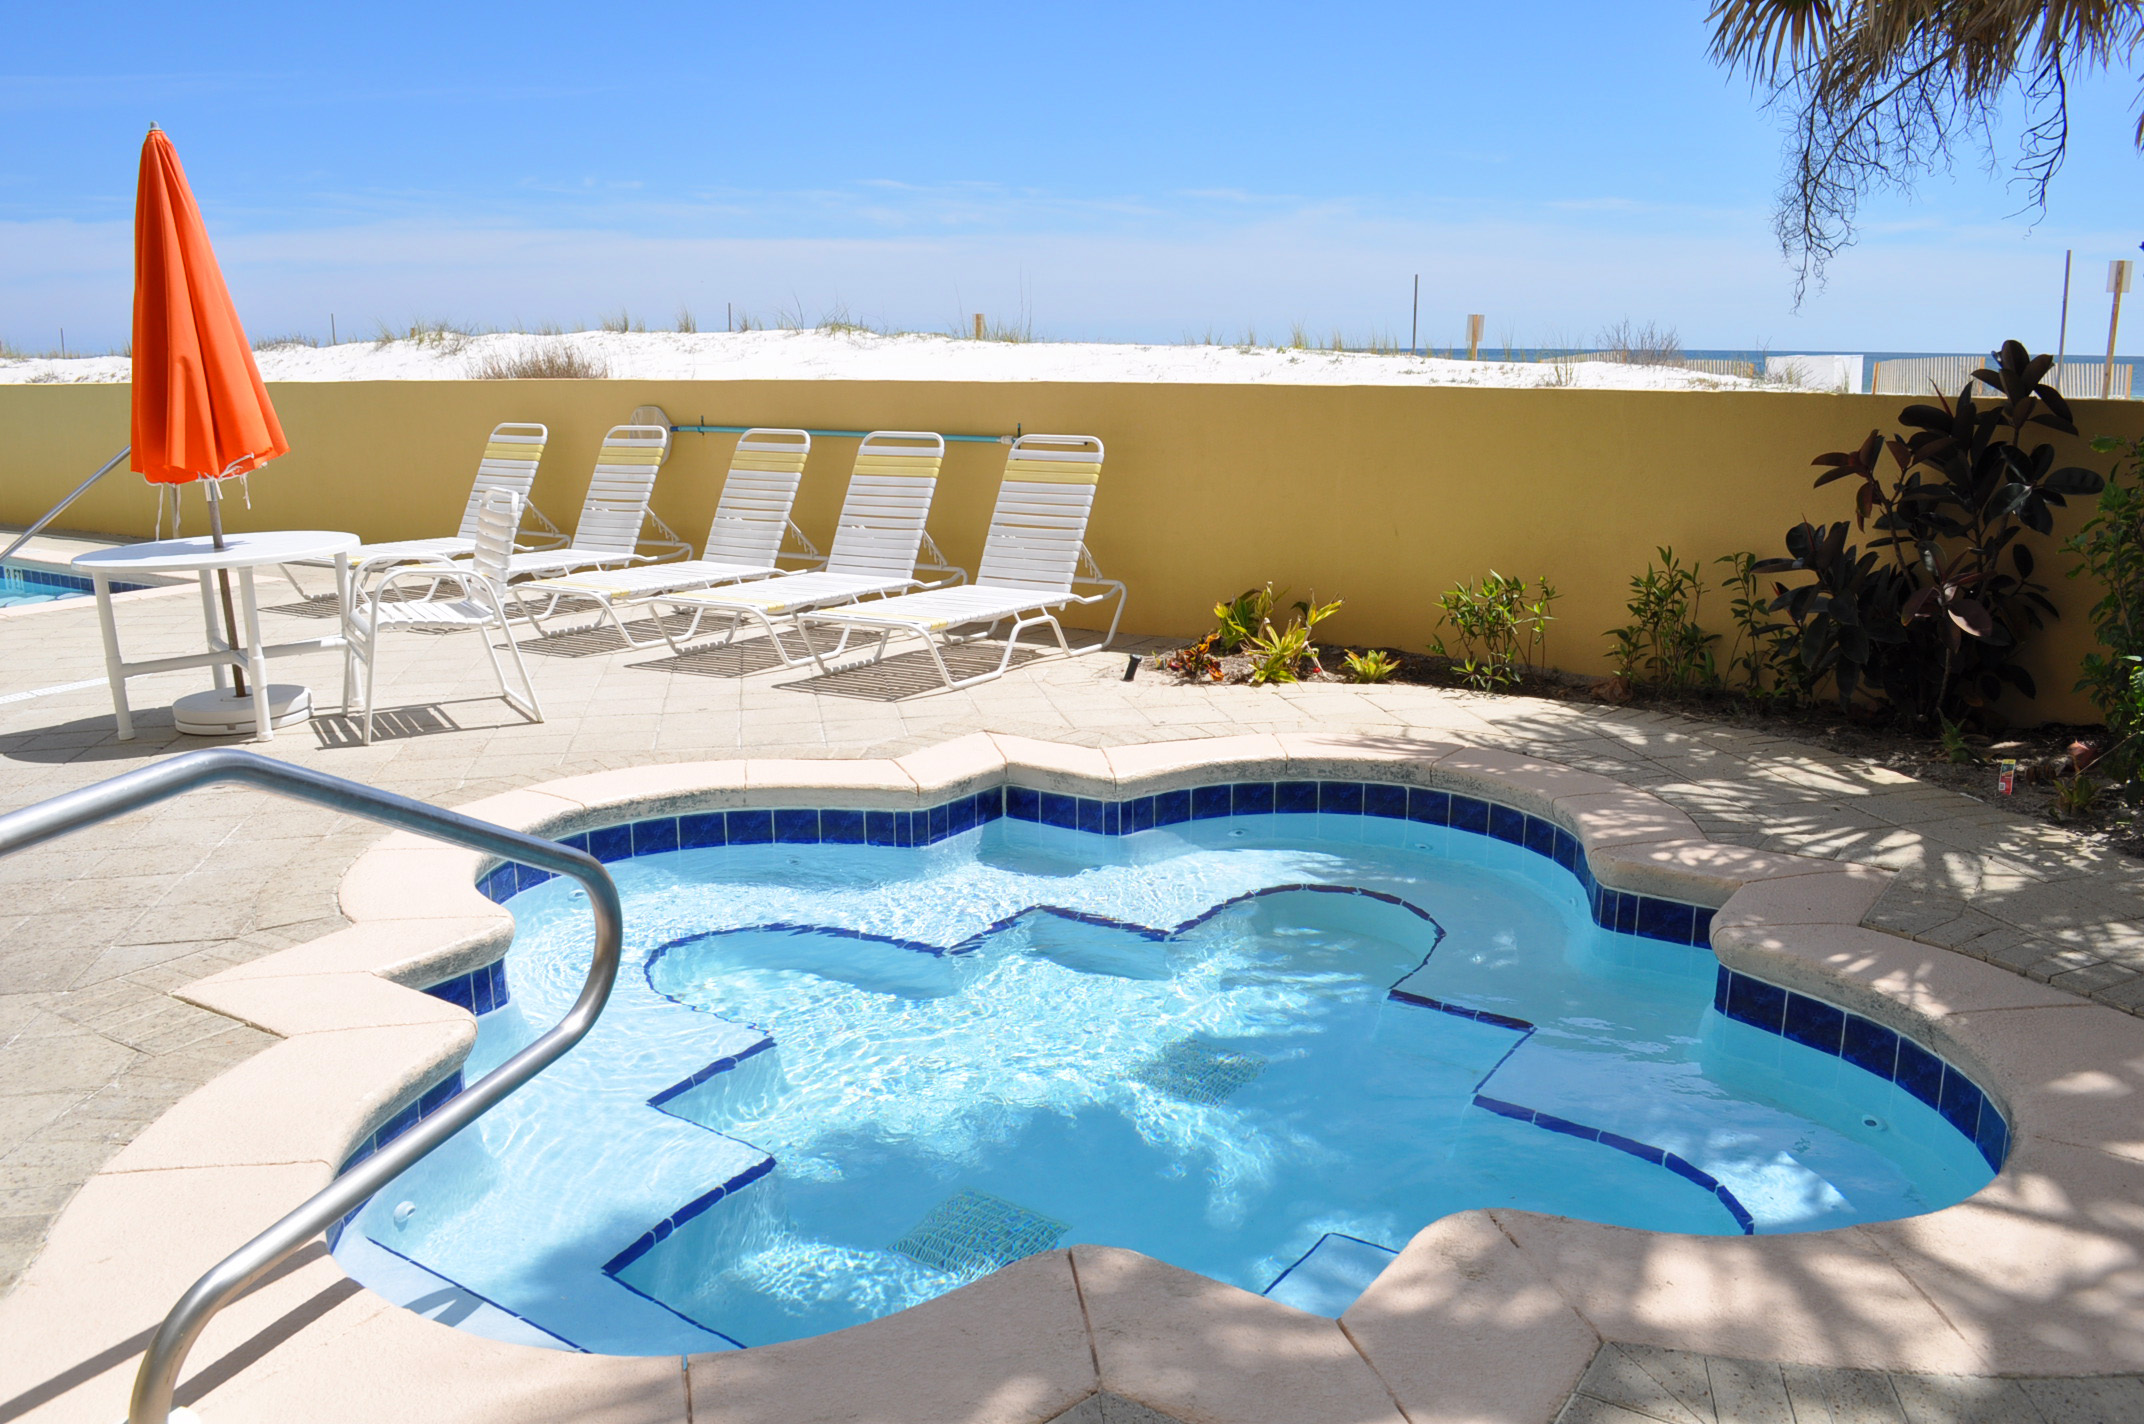 Pelican Isle Resort Okaloosa Island Fort Walton Beach FL Vacation Rentals by Sunset Resort Rentals